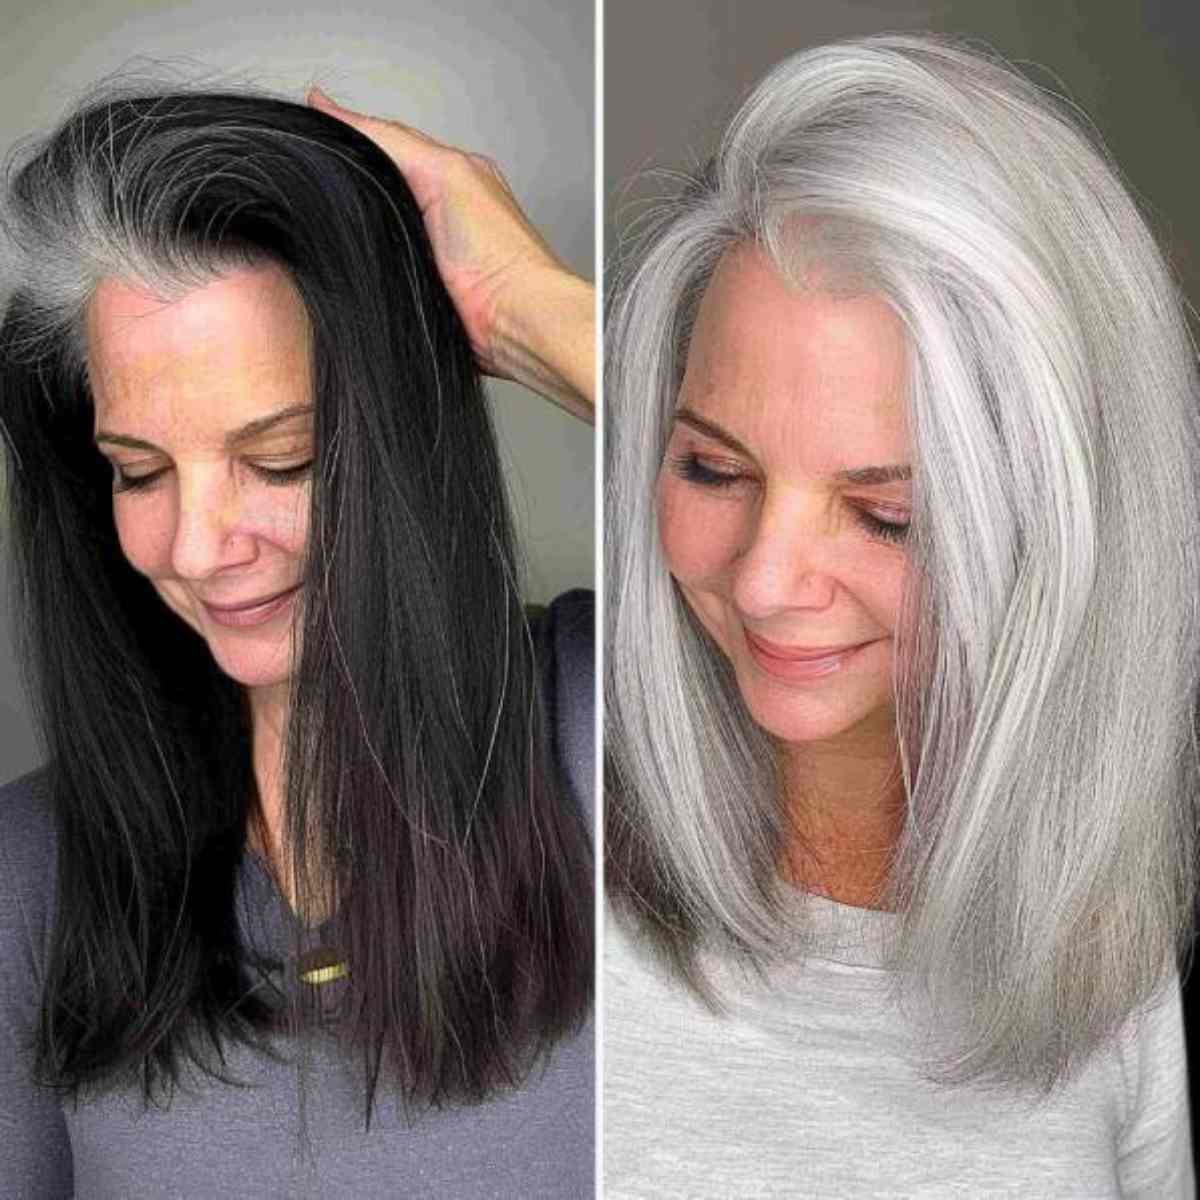 Woman transitioning to shoulder-length sleek silver hair from natural dark waves.